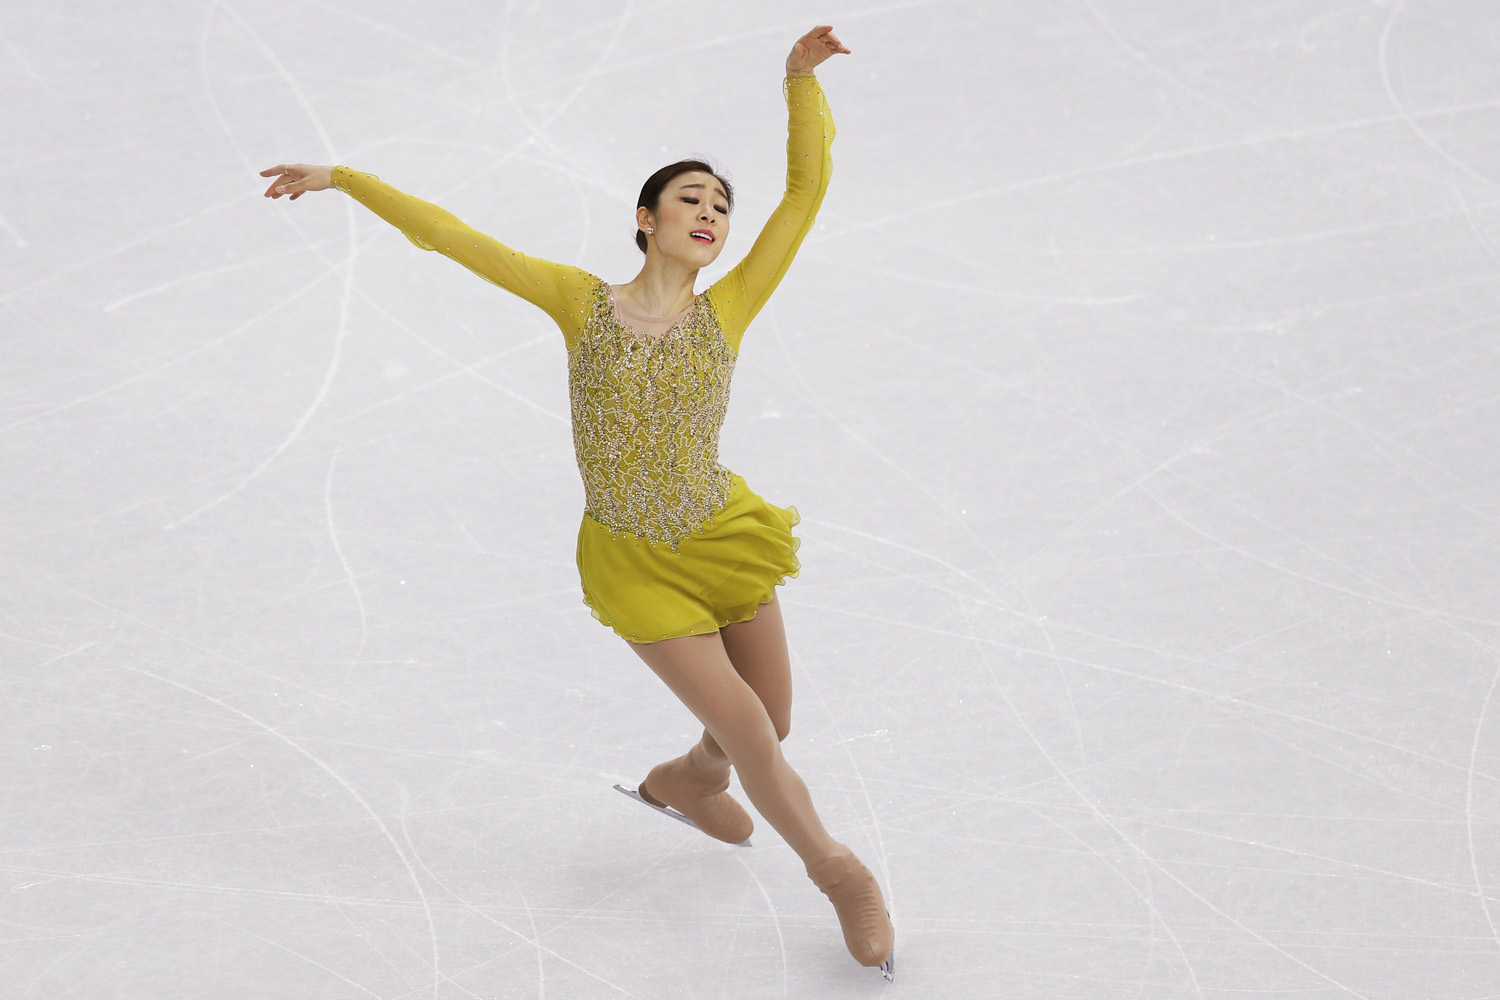 Korea's Yuna Kim competes during the Figure Skating Women's Short Program at the Sochi 2014 Winter Olympics